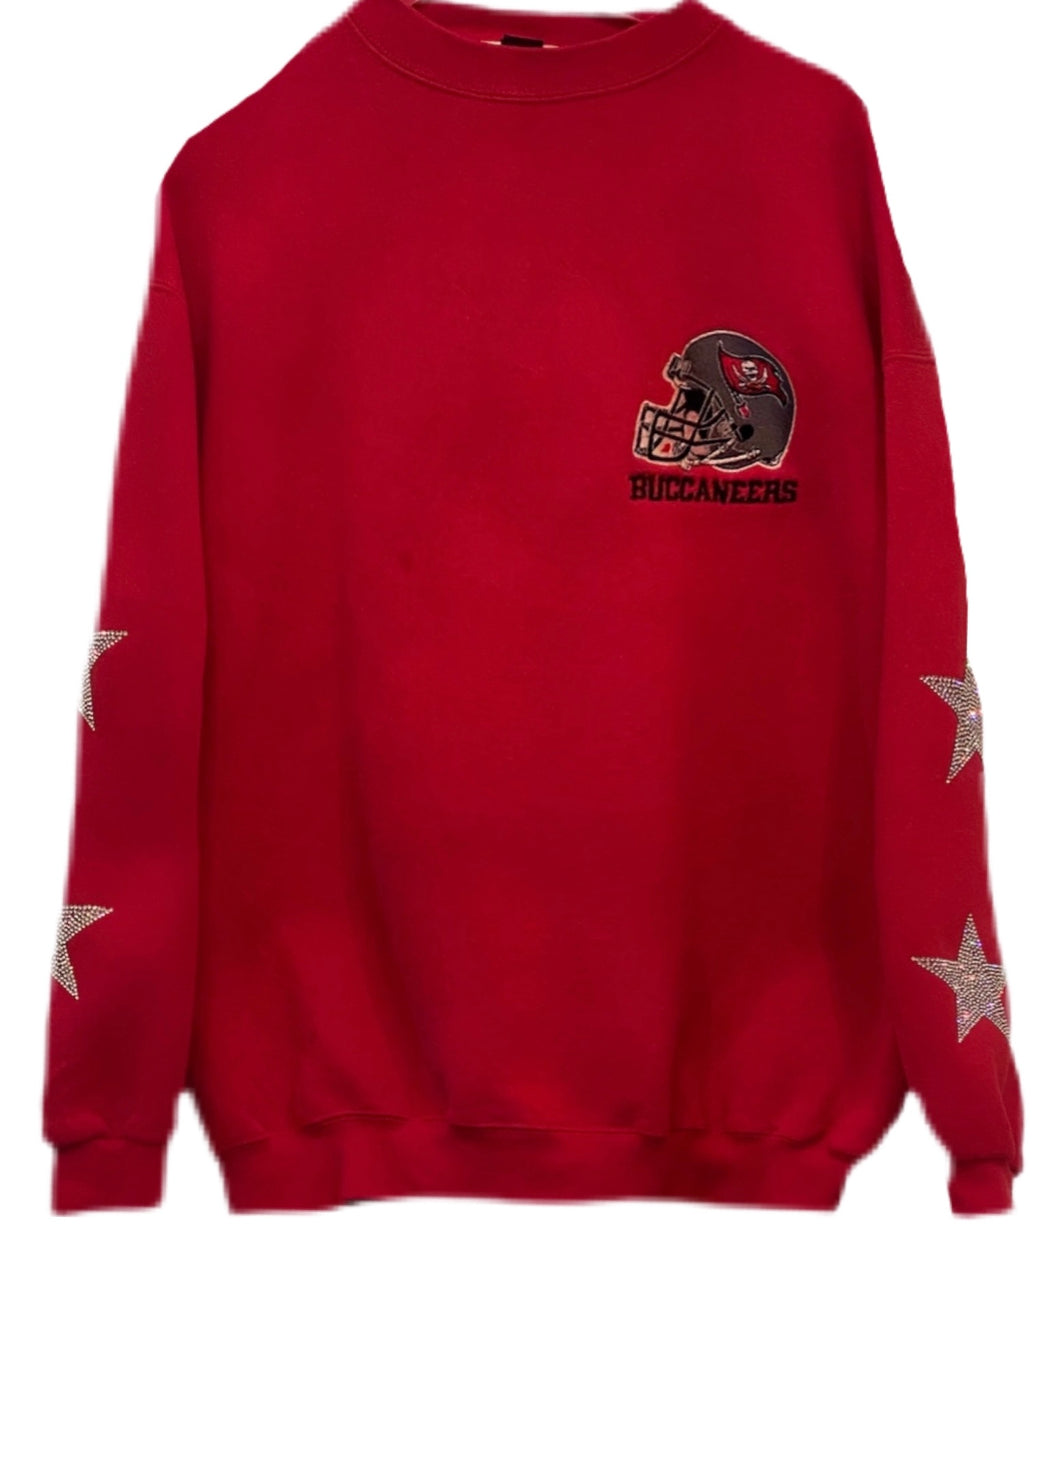 Tampa Bay Buccaneers, NFL One of a KIND Vintage Sweatshirt with Crystal Star Design